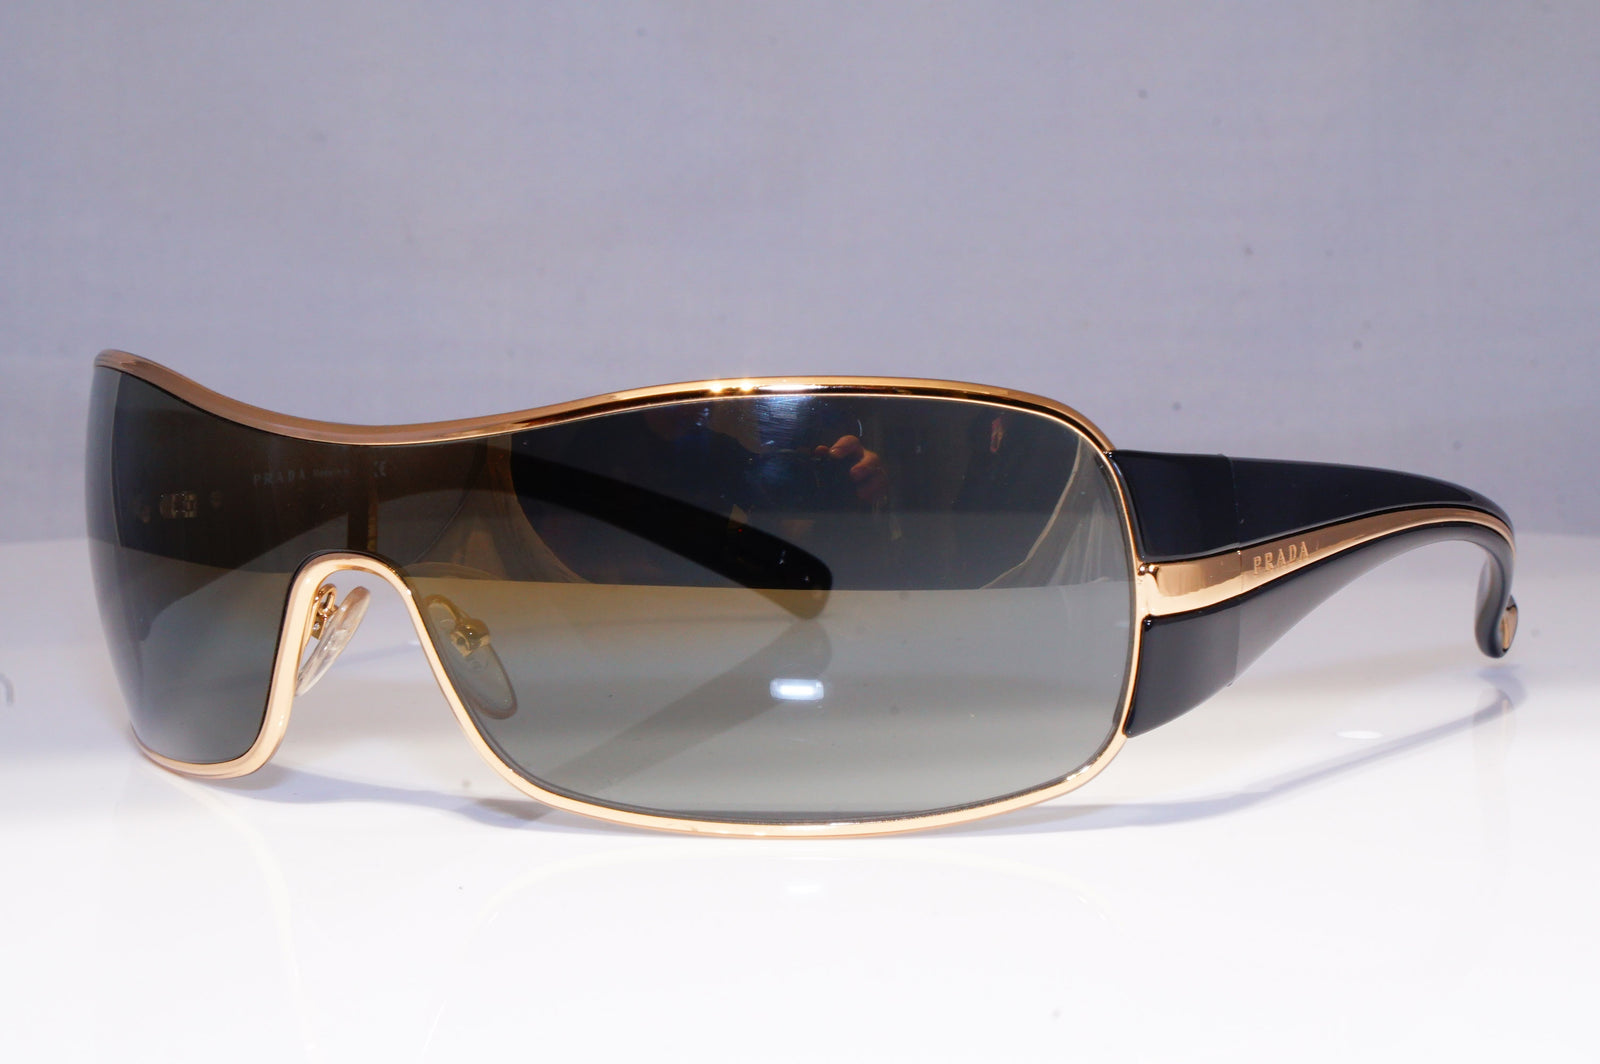 prada sunglasses black and gold